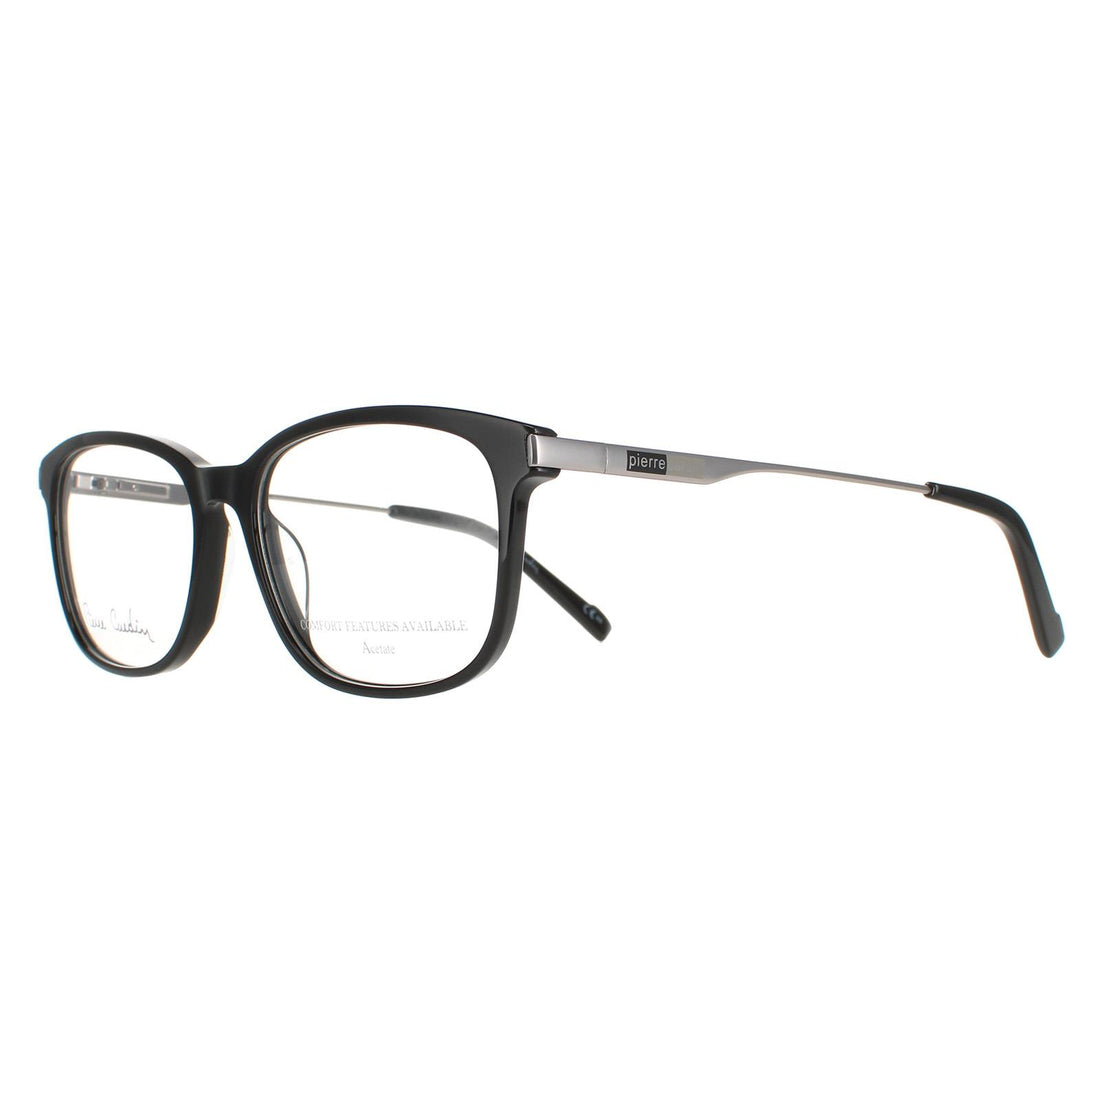 Pierre Cardin Glasses Frames P.C. 6213 807 Black Men